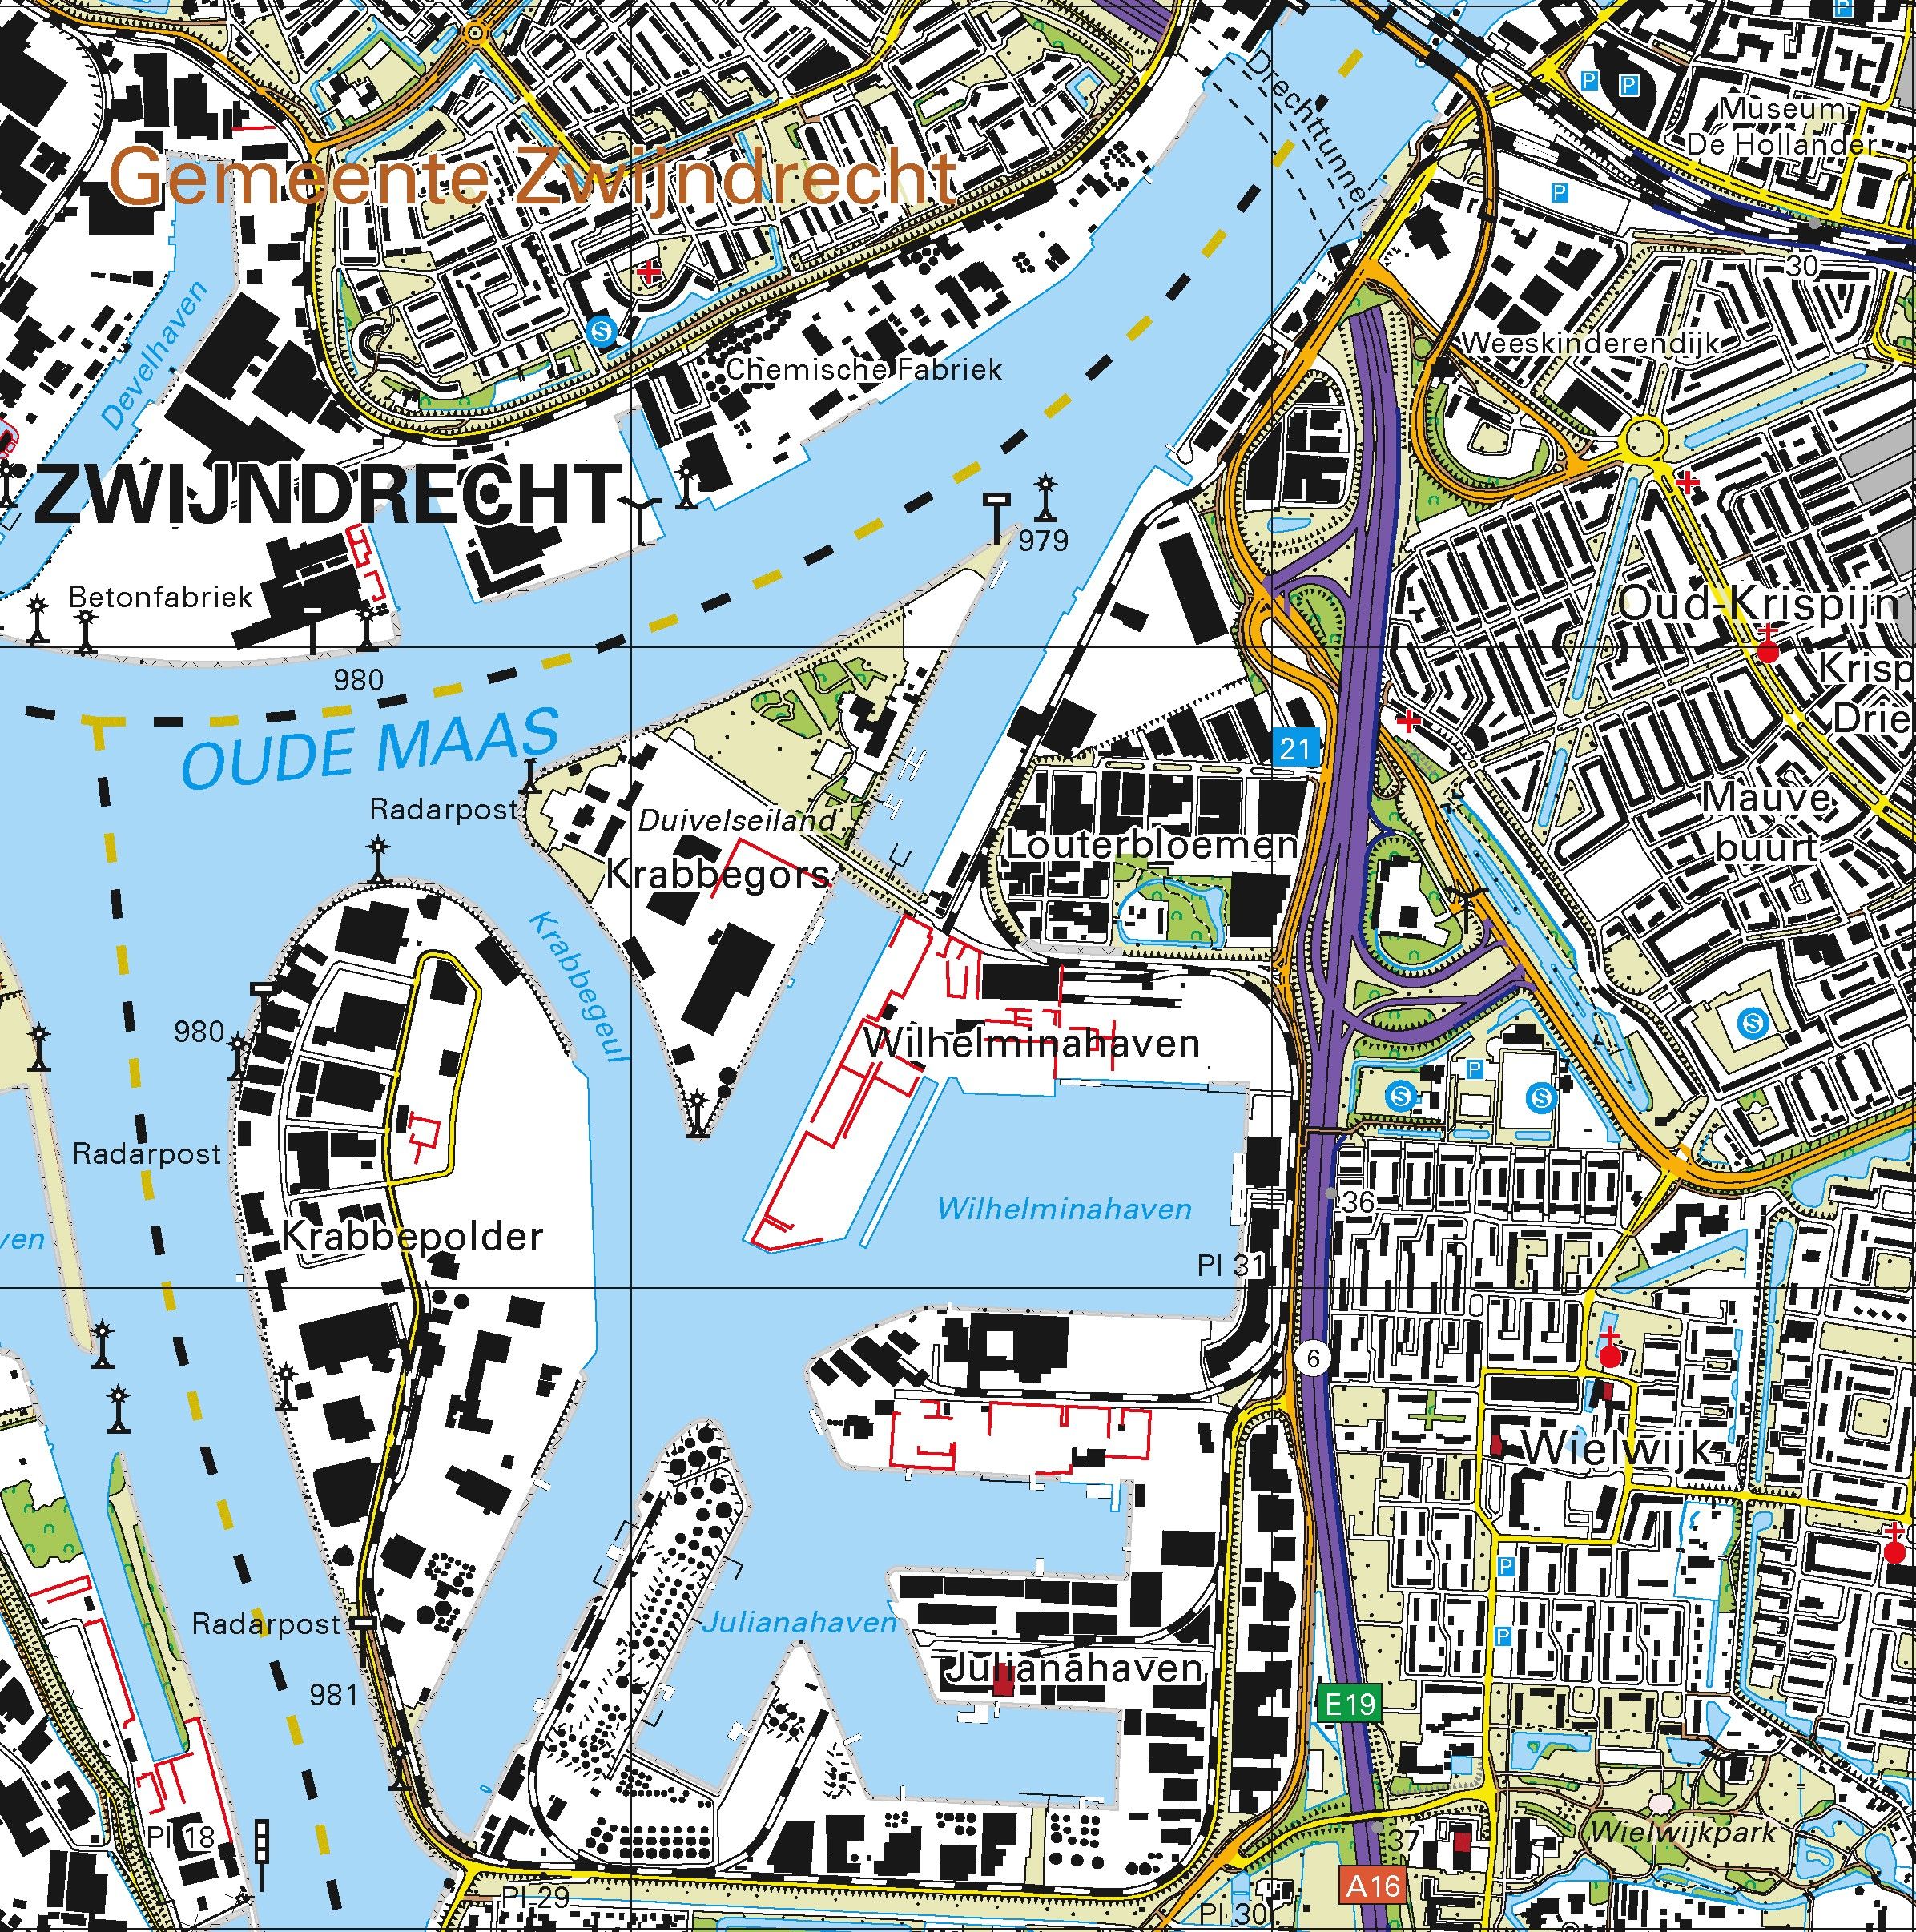 Topografische kaart schaal 1:25.000 (Rotterdam, Ridderkerk, Barendrecht, Zwijndrecht, Papendrecht,Dordrecht)